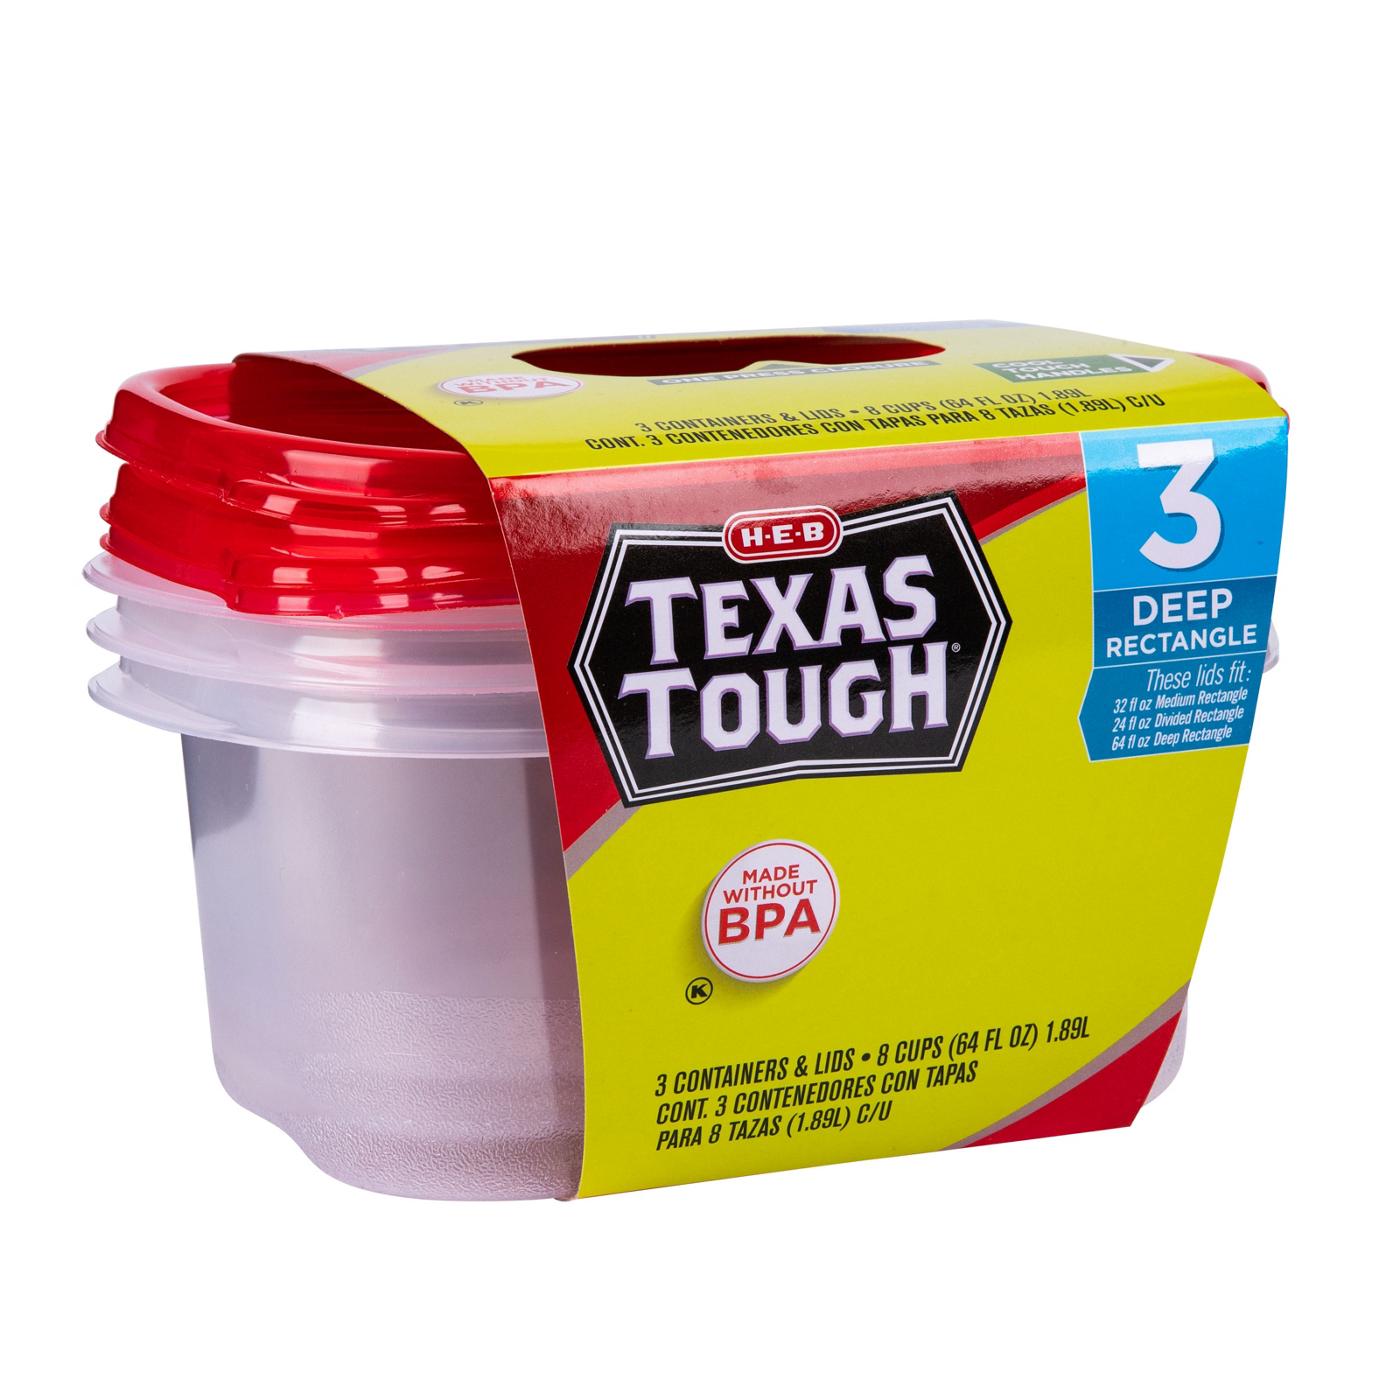 H-E-B Texas Tough Medium Square Reusable Containers with Lids